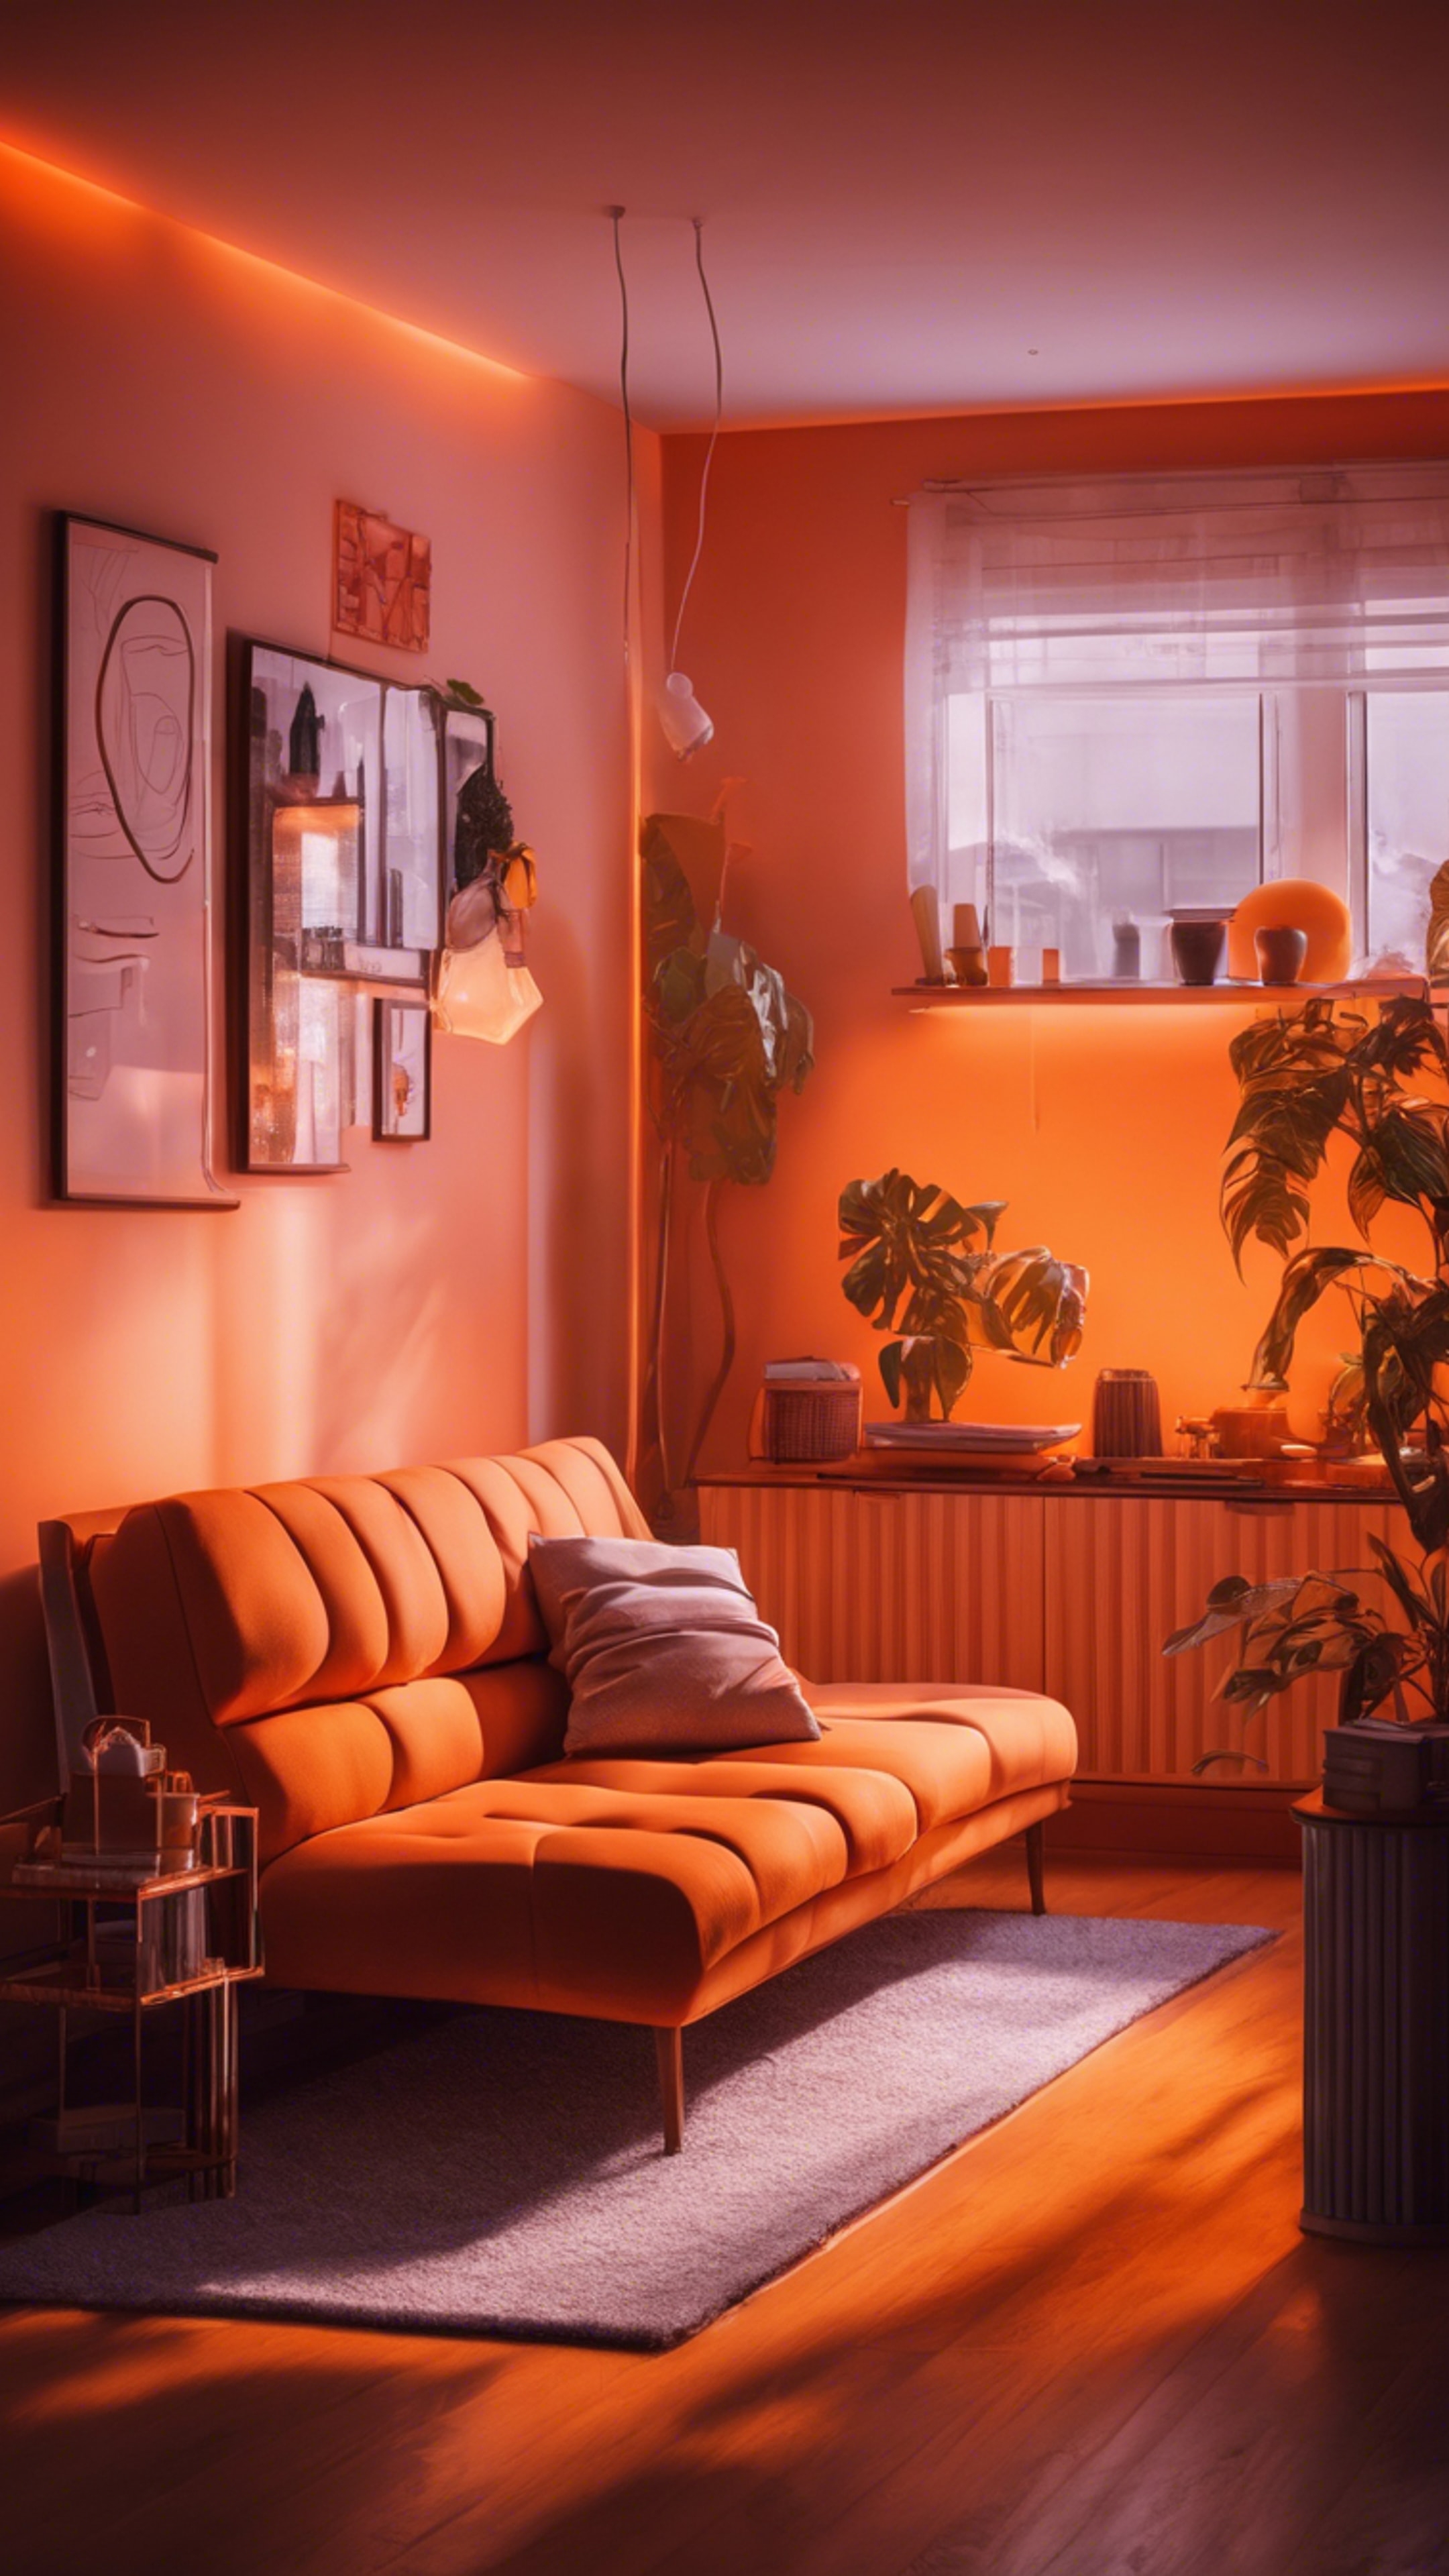 A fresh orange living room with trendy neon lights casting beautiful shadows. Обои[39213640e9864c1aa0c4]